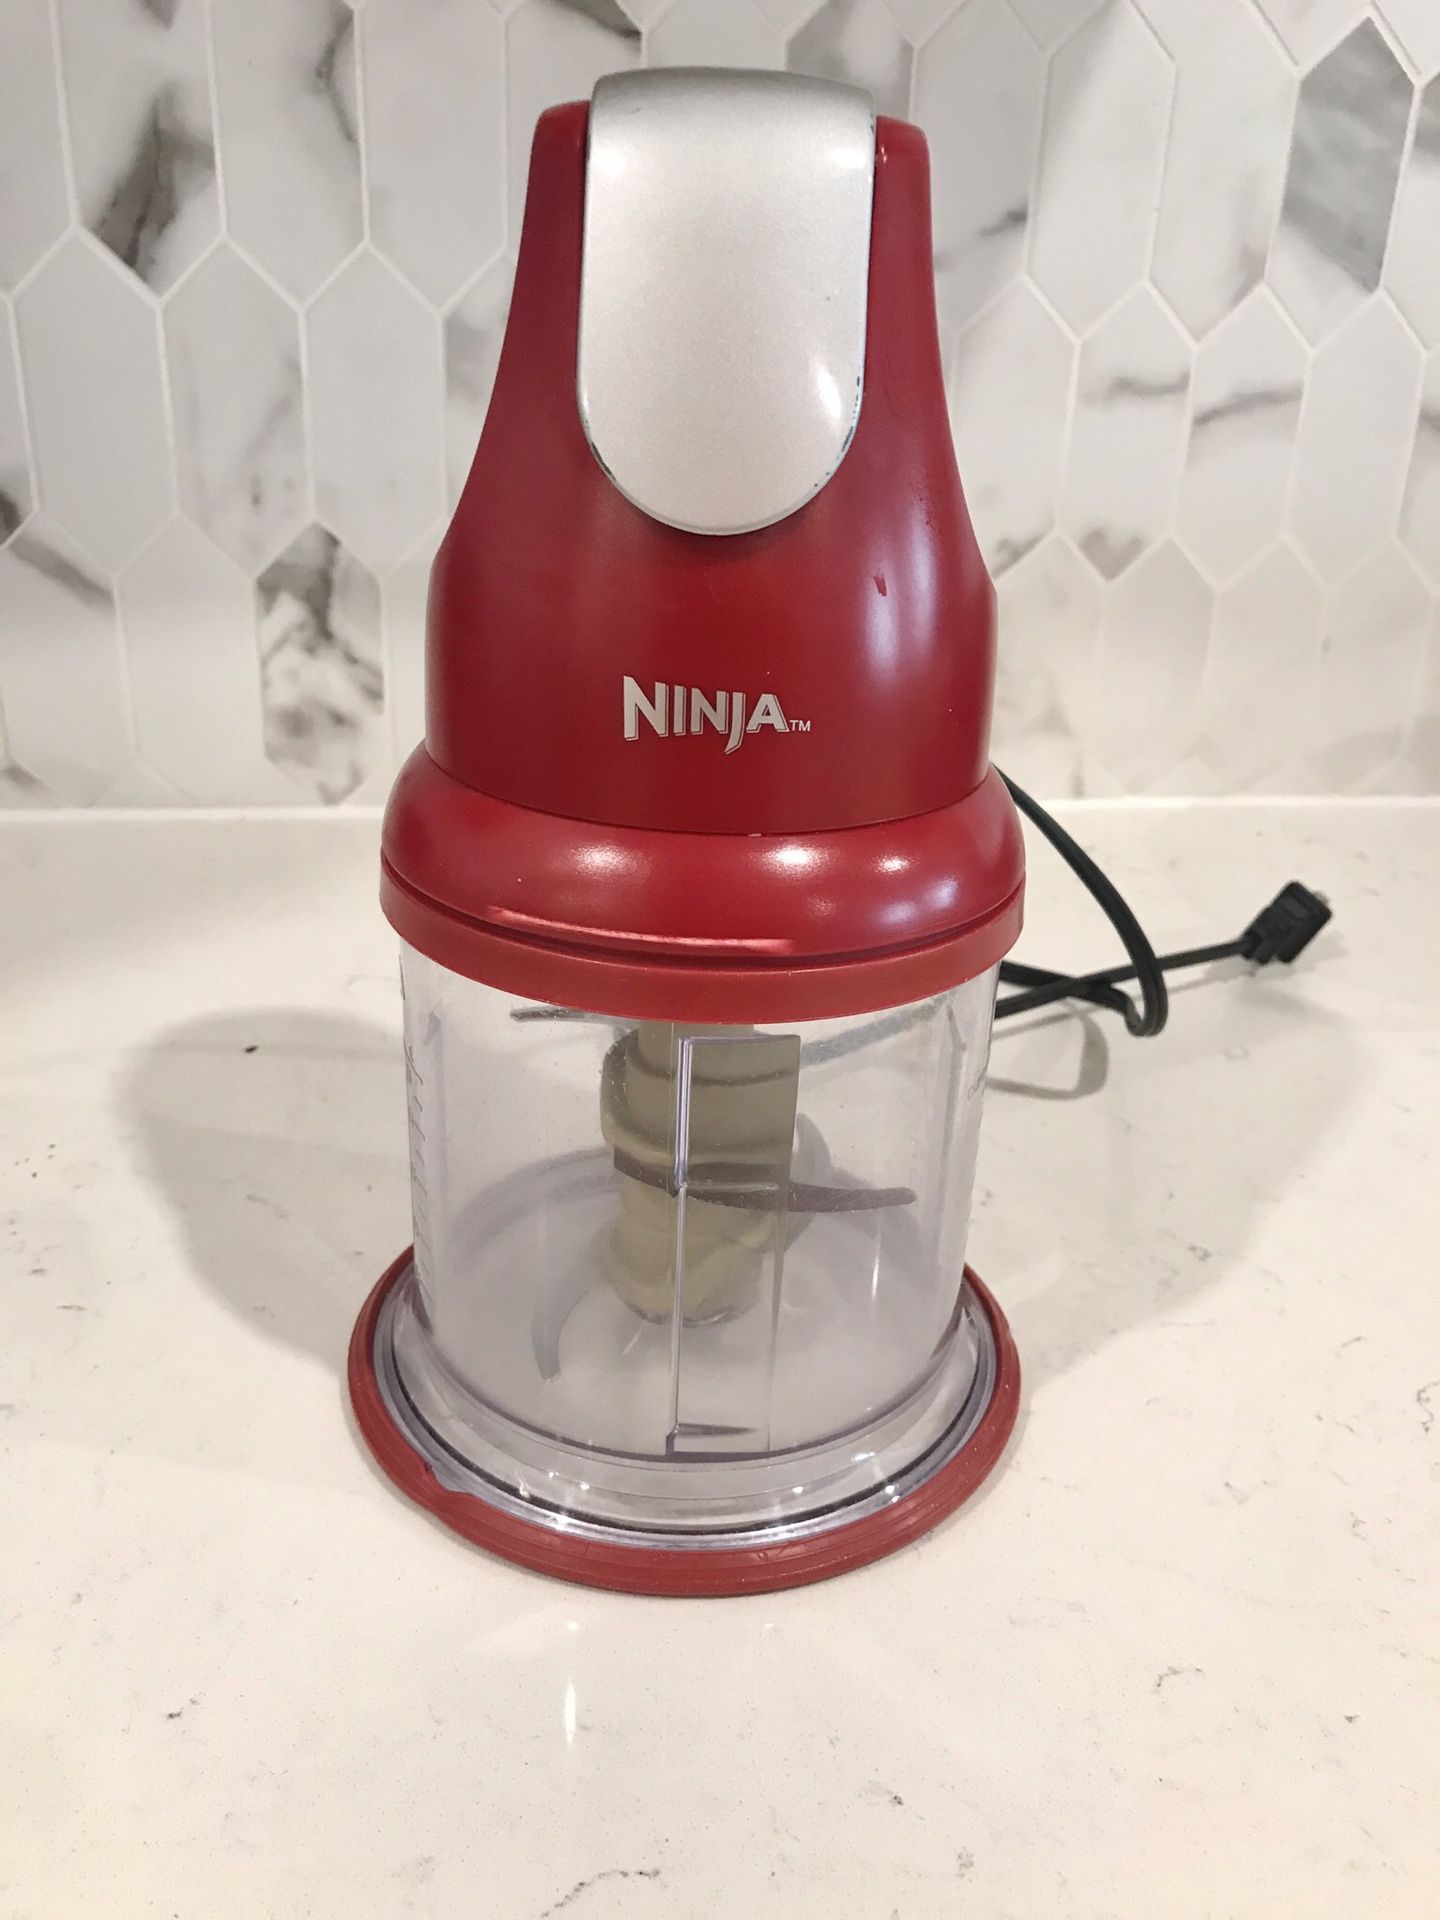 Ninja express chop chopper mini blender